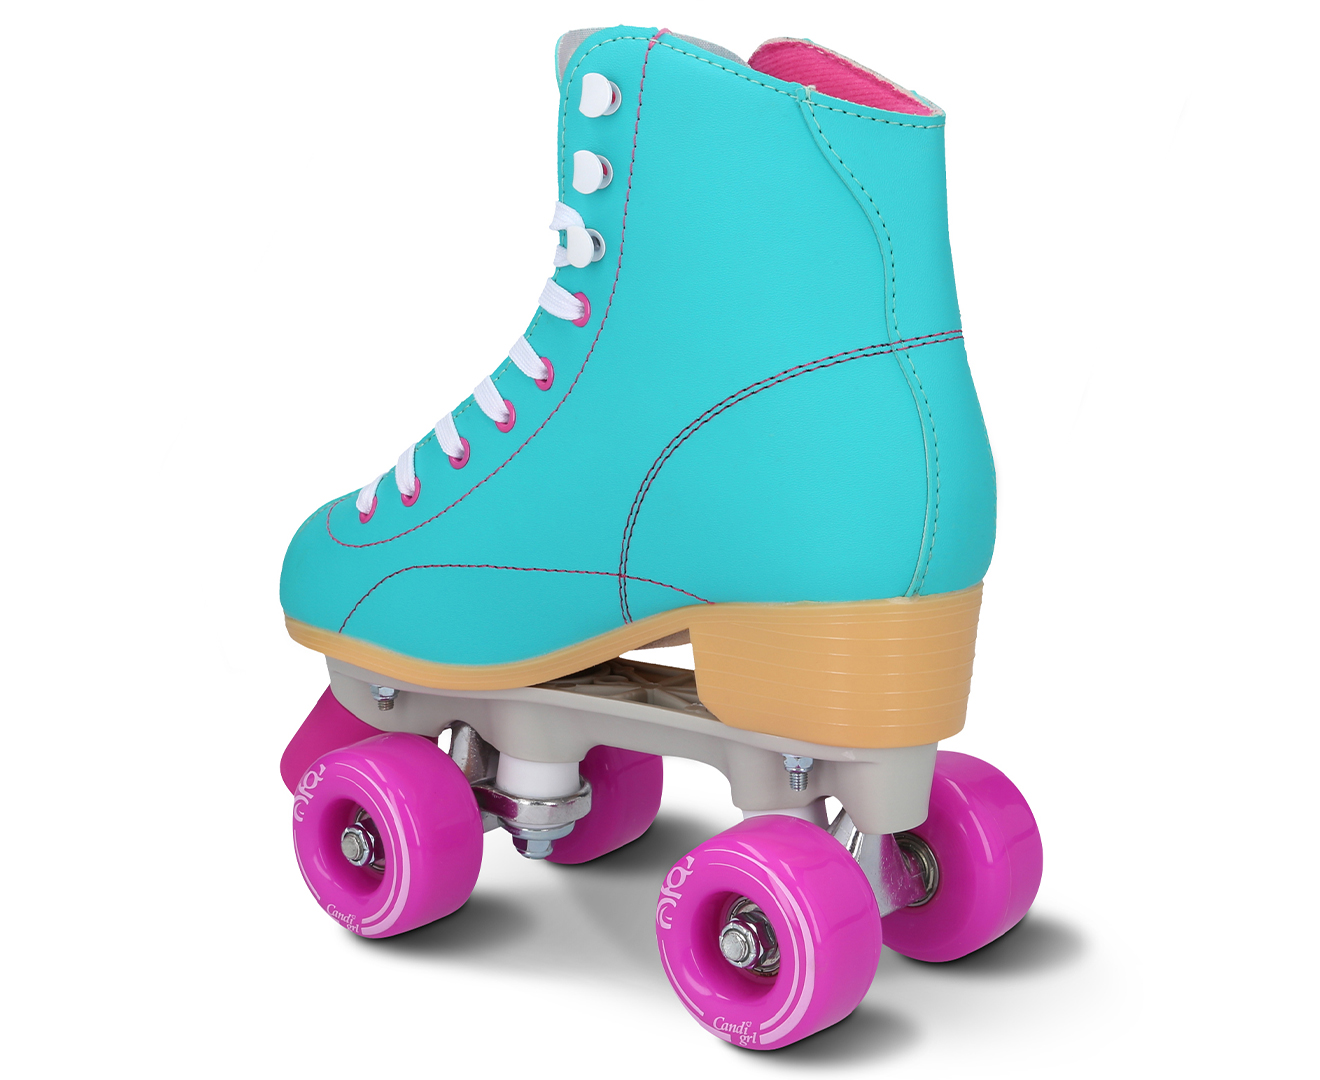 Roller Derby Women's Candi Grl Sabina Roller Skates - Mint | Catch.co.nz